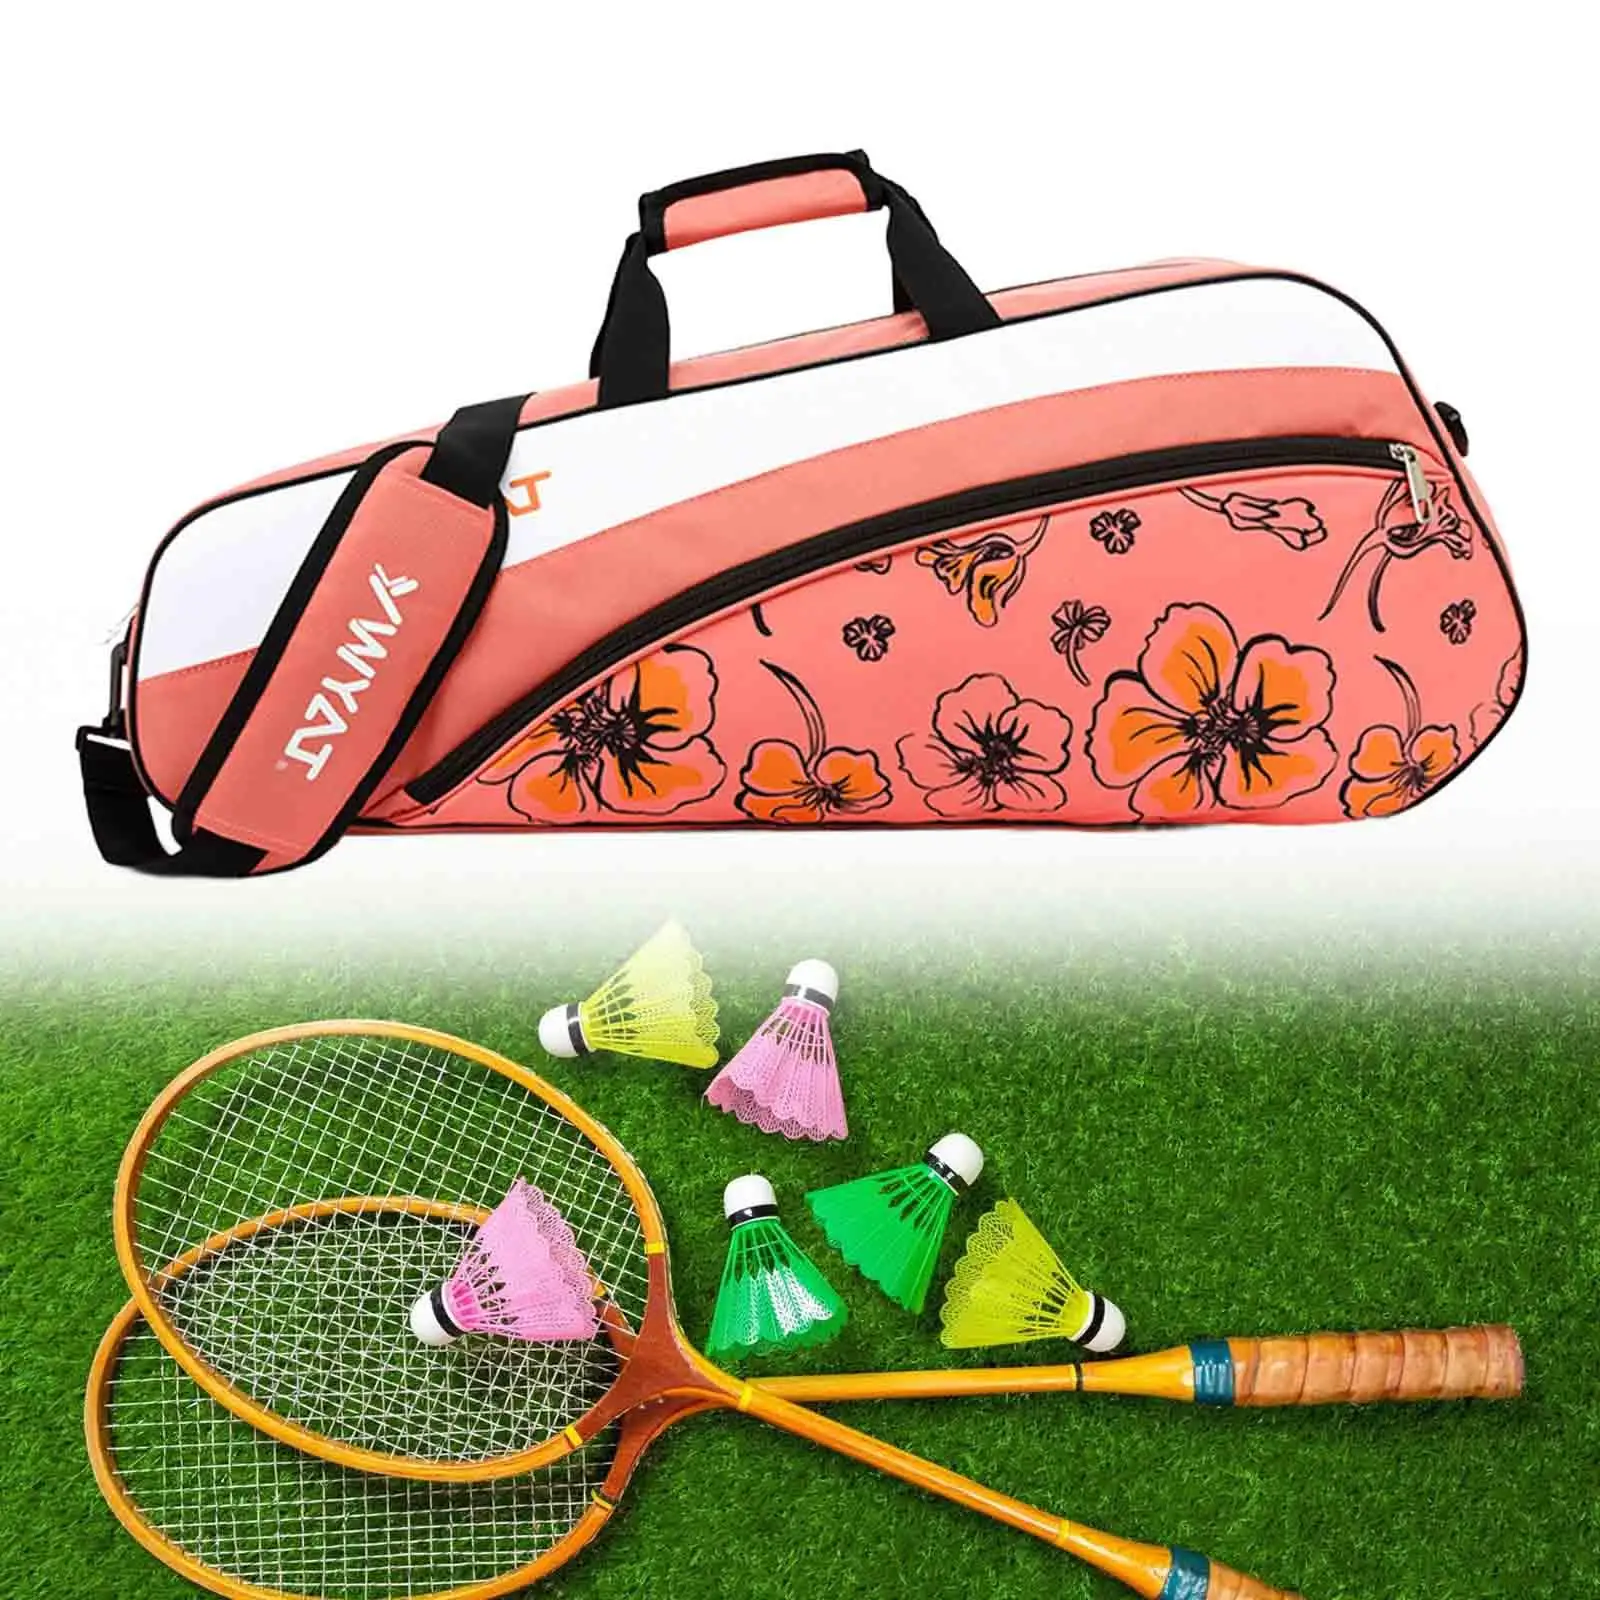 Badminton Racket Bag Large Racket Sports Bag for Badminton Squash Racquets Badminton Enthusiasts Tennis Enthusiasts Competitions